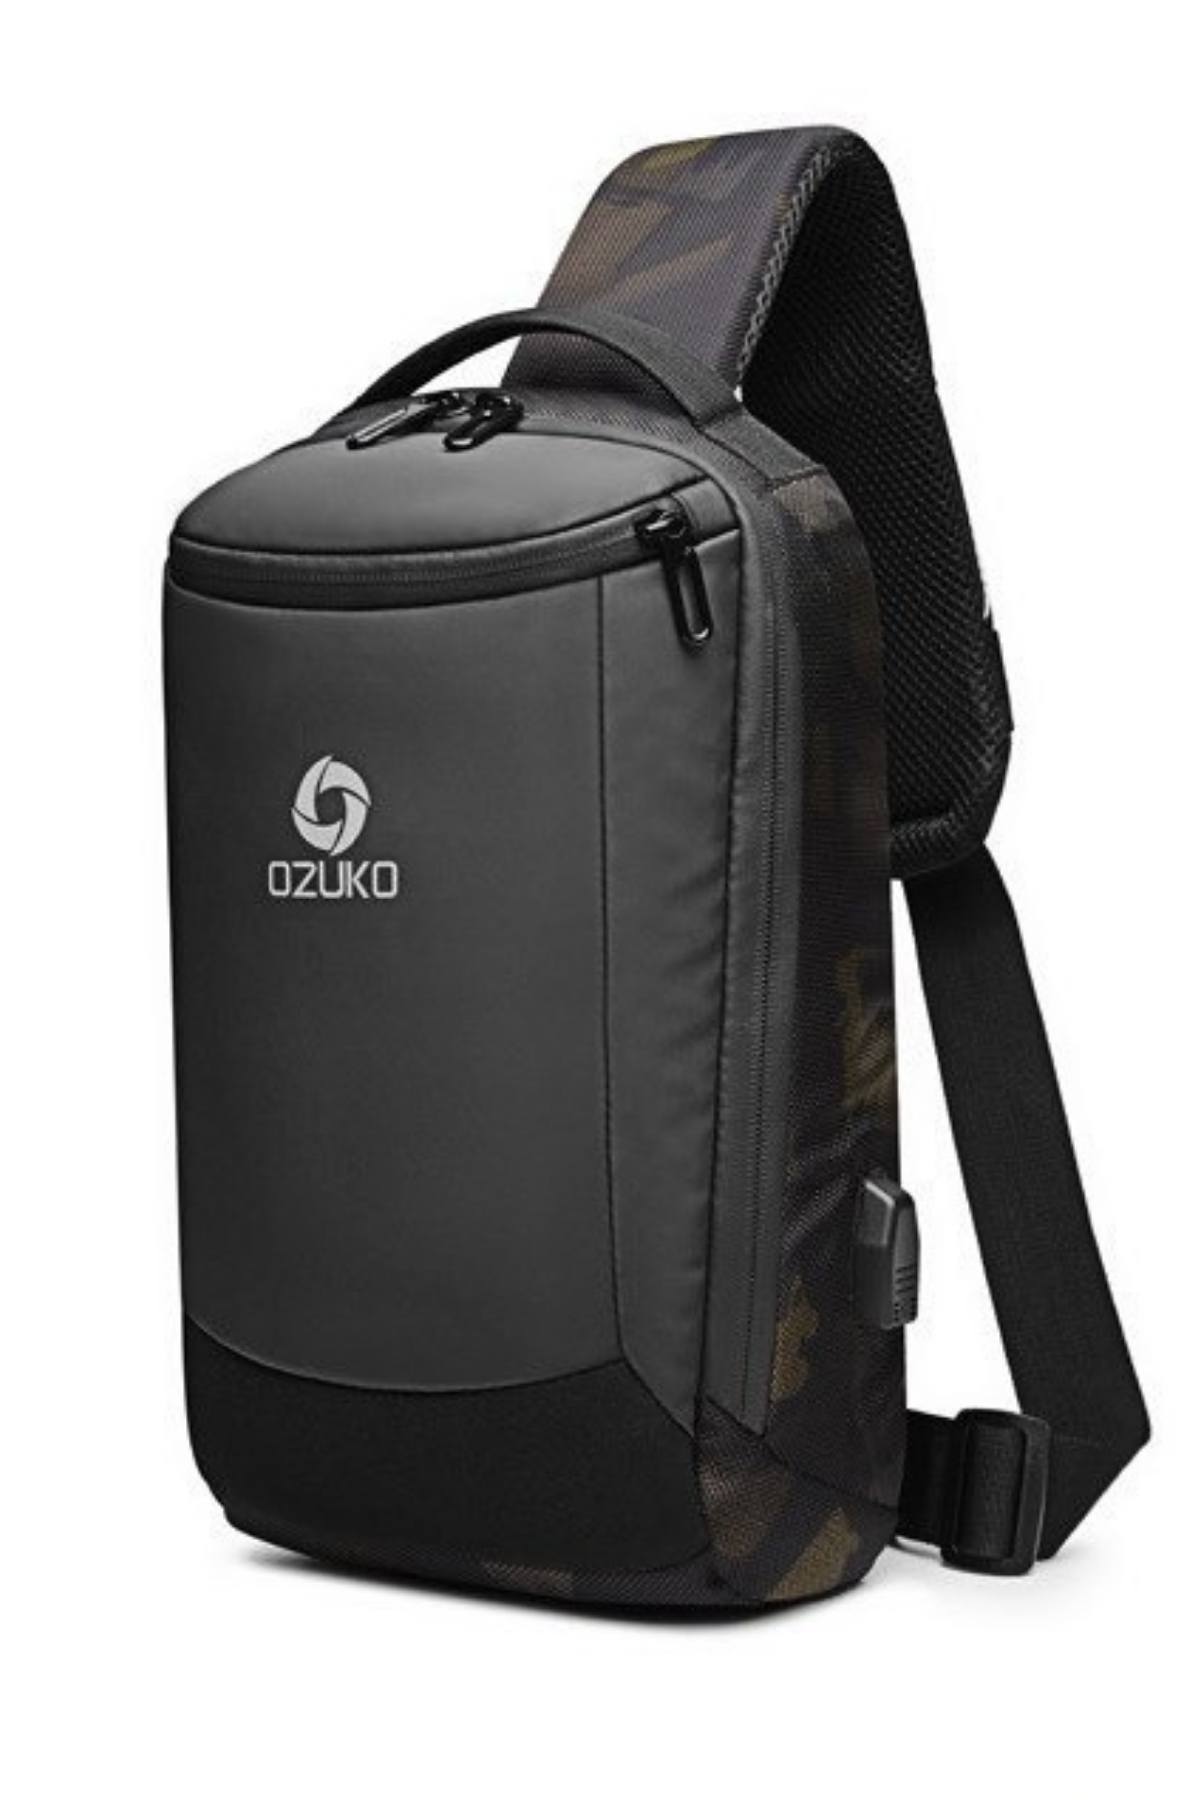 Ozuko Camo Waterproof Crossbody Single Shoulder Bag